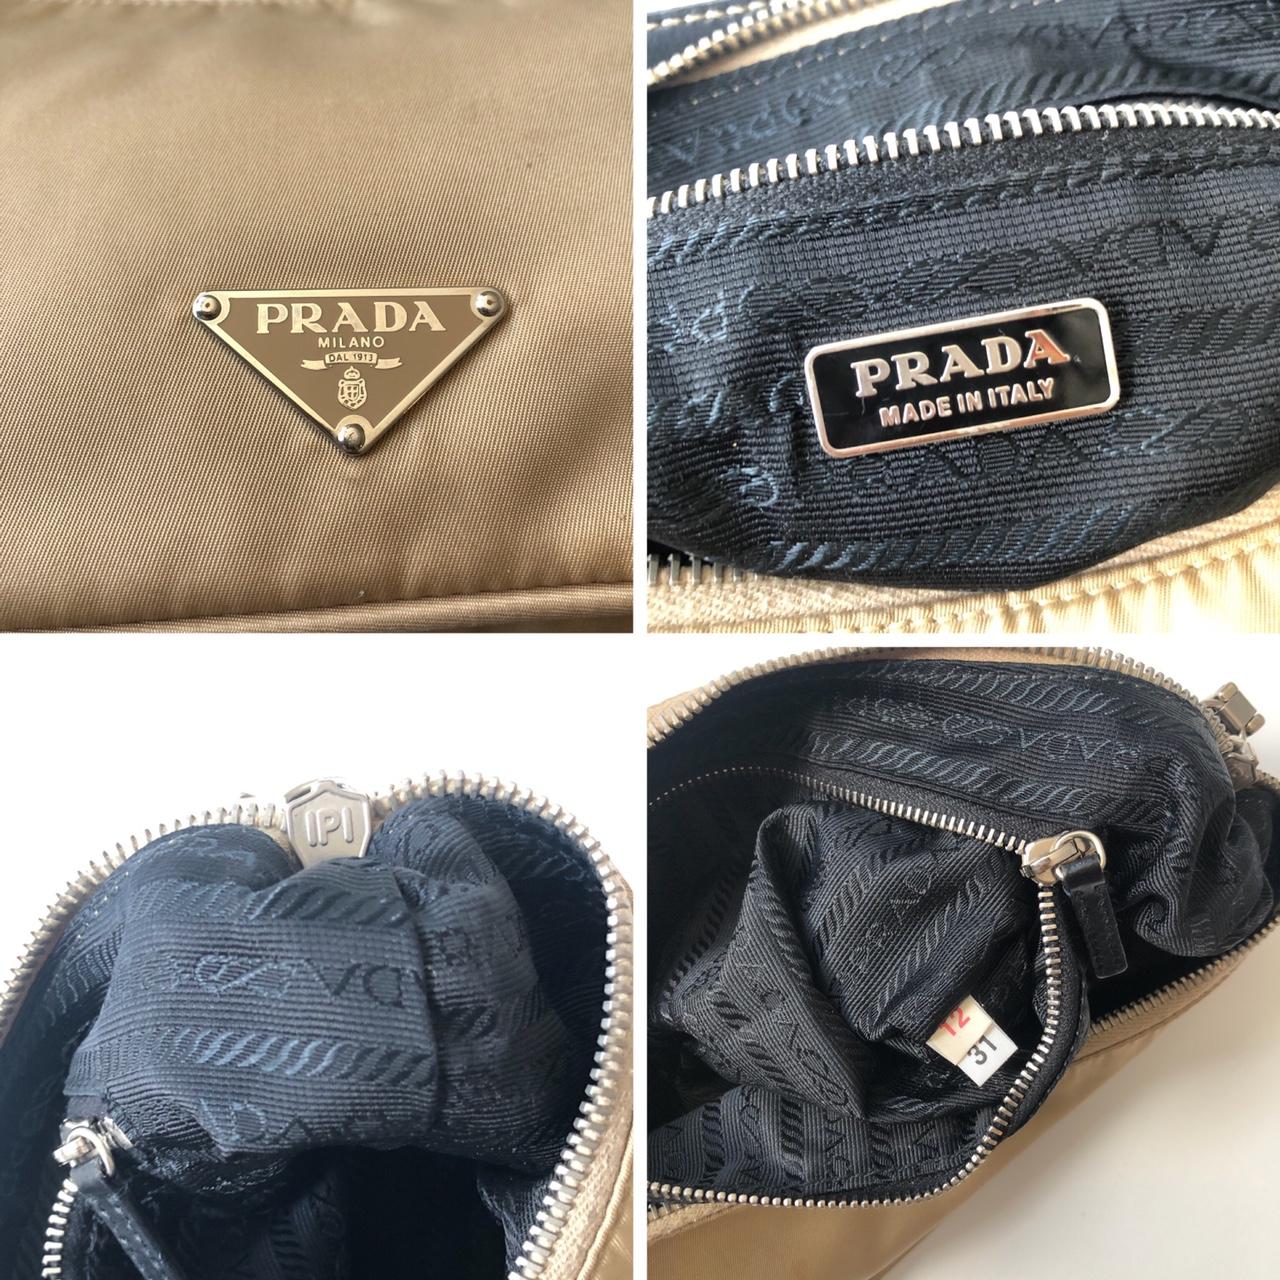 GENUINE PRADA BAG. Leather Milano dal 1913 bag, - Depop